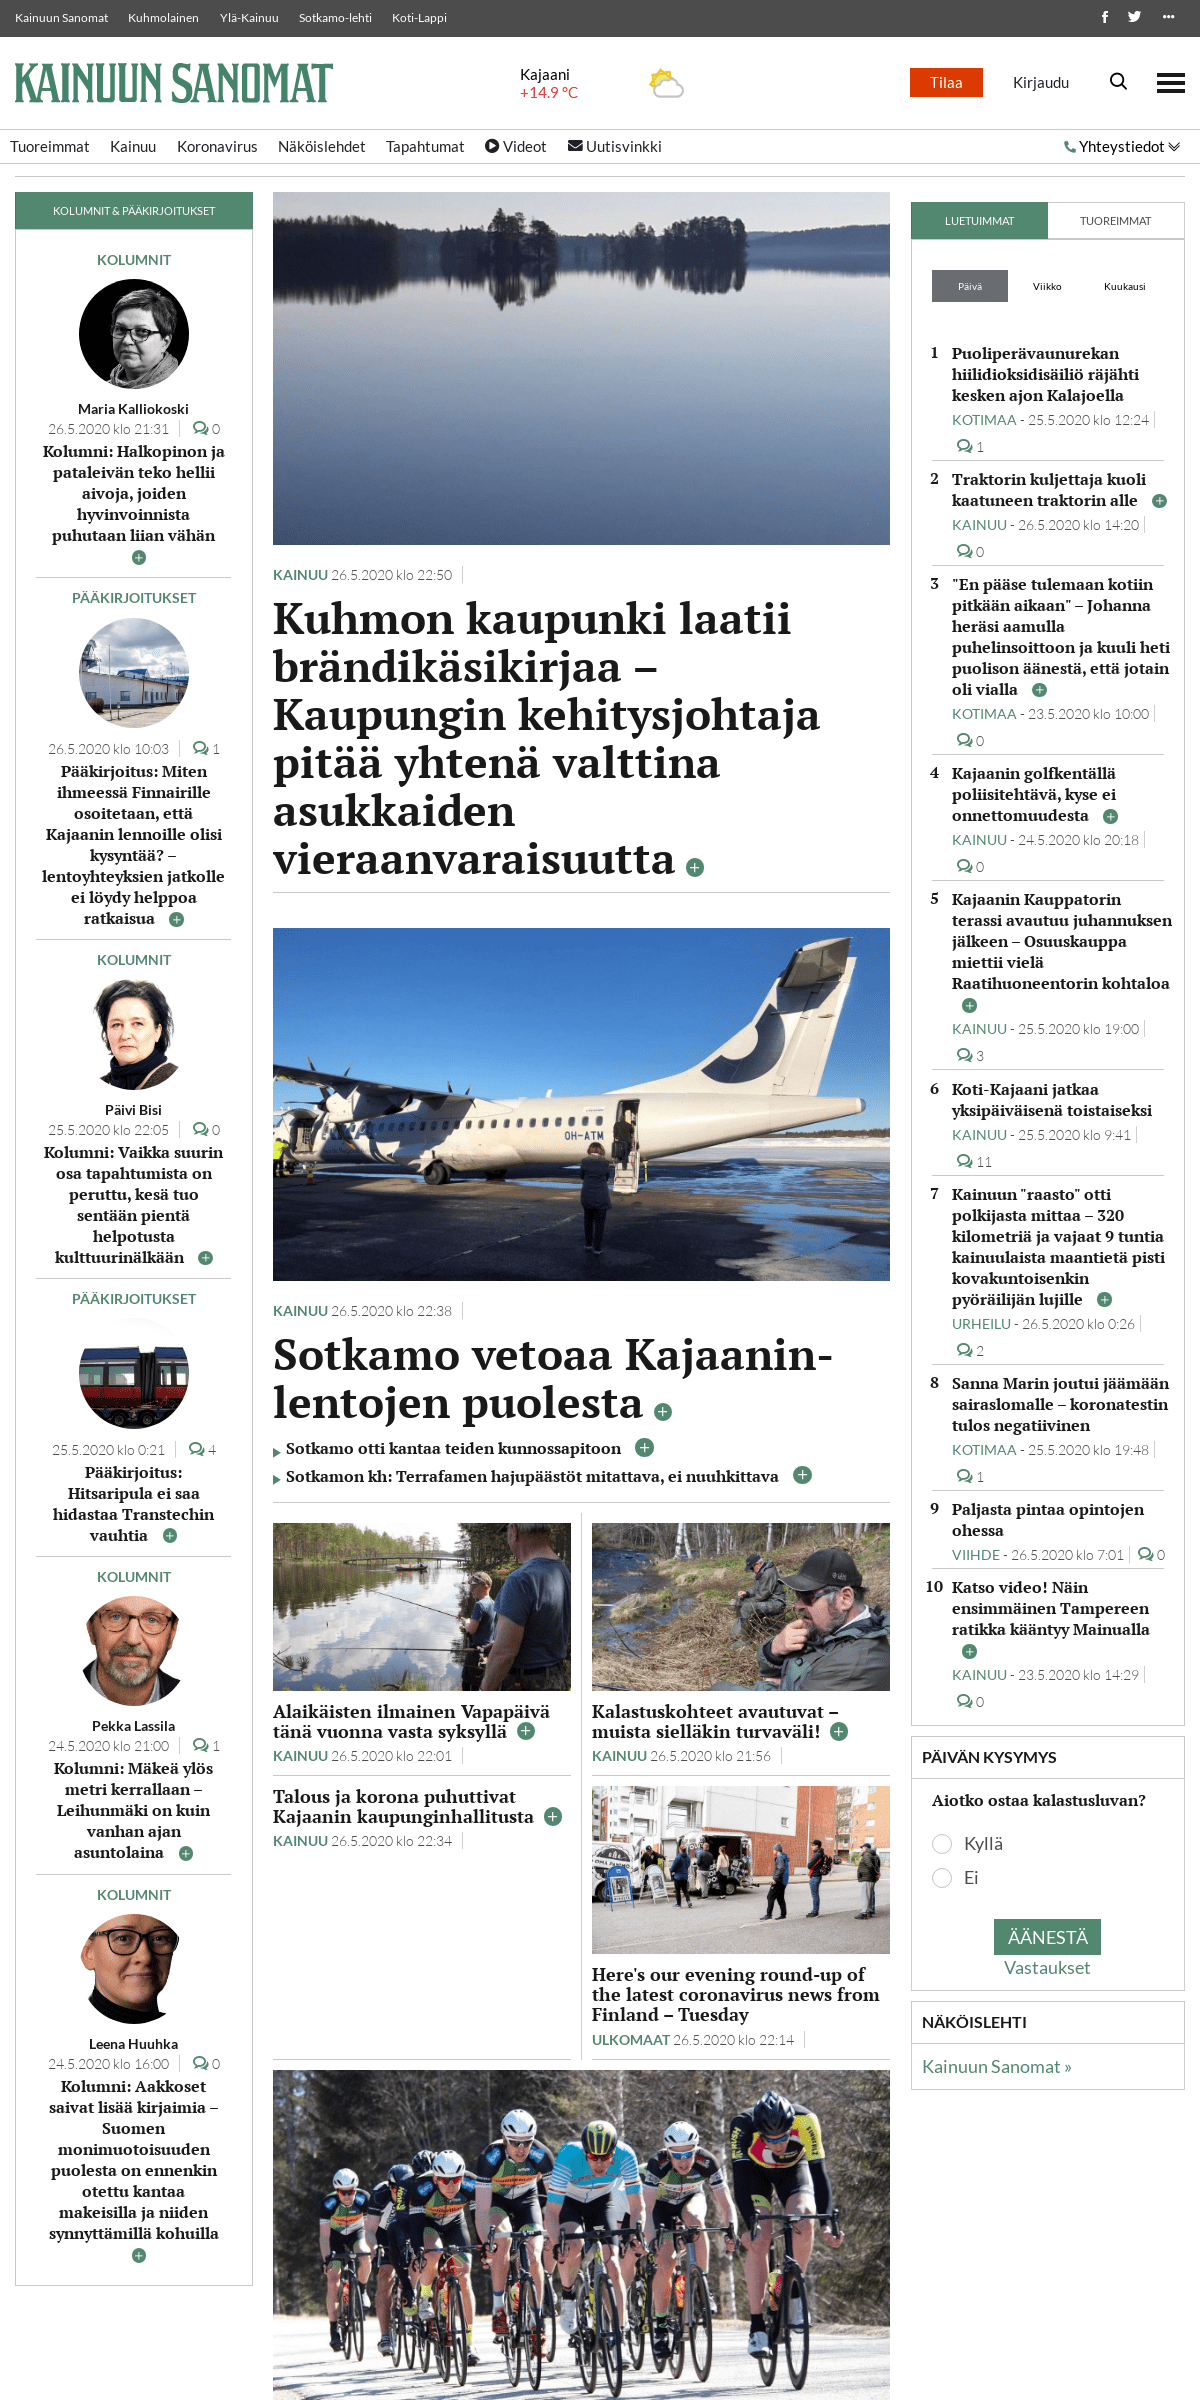 A complete backup of kainuunsanomat.fi